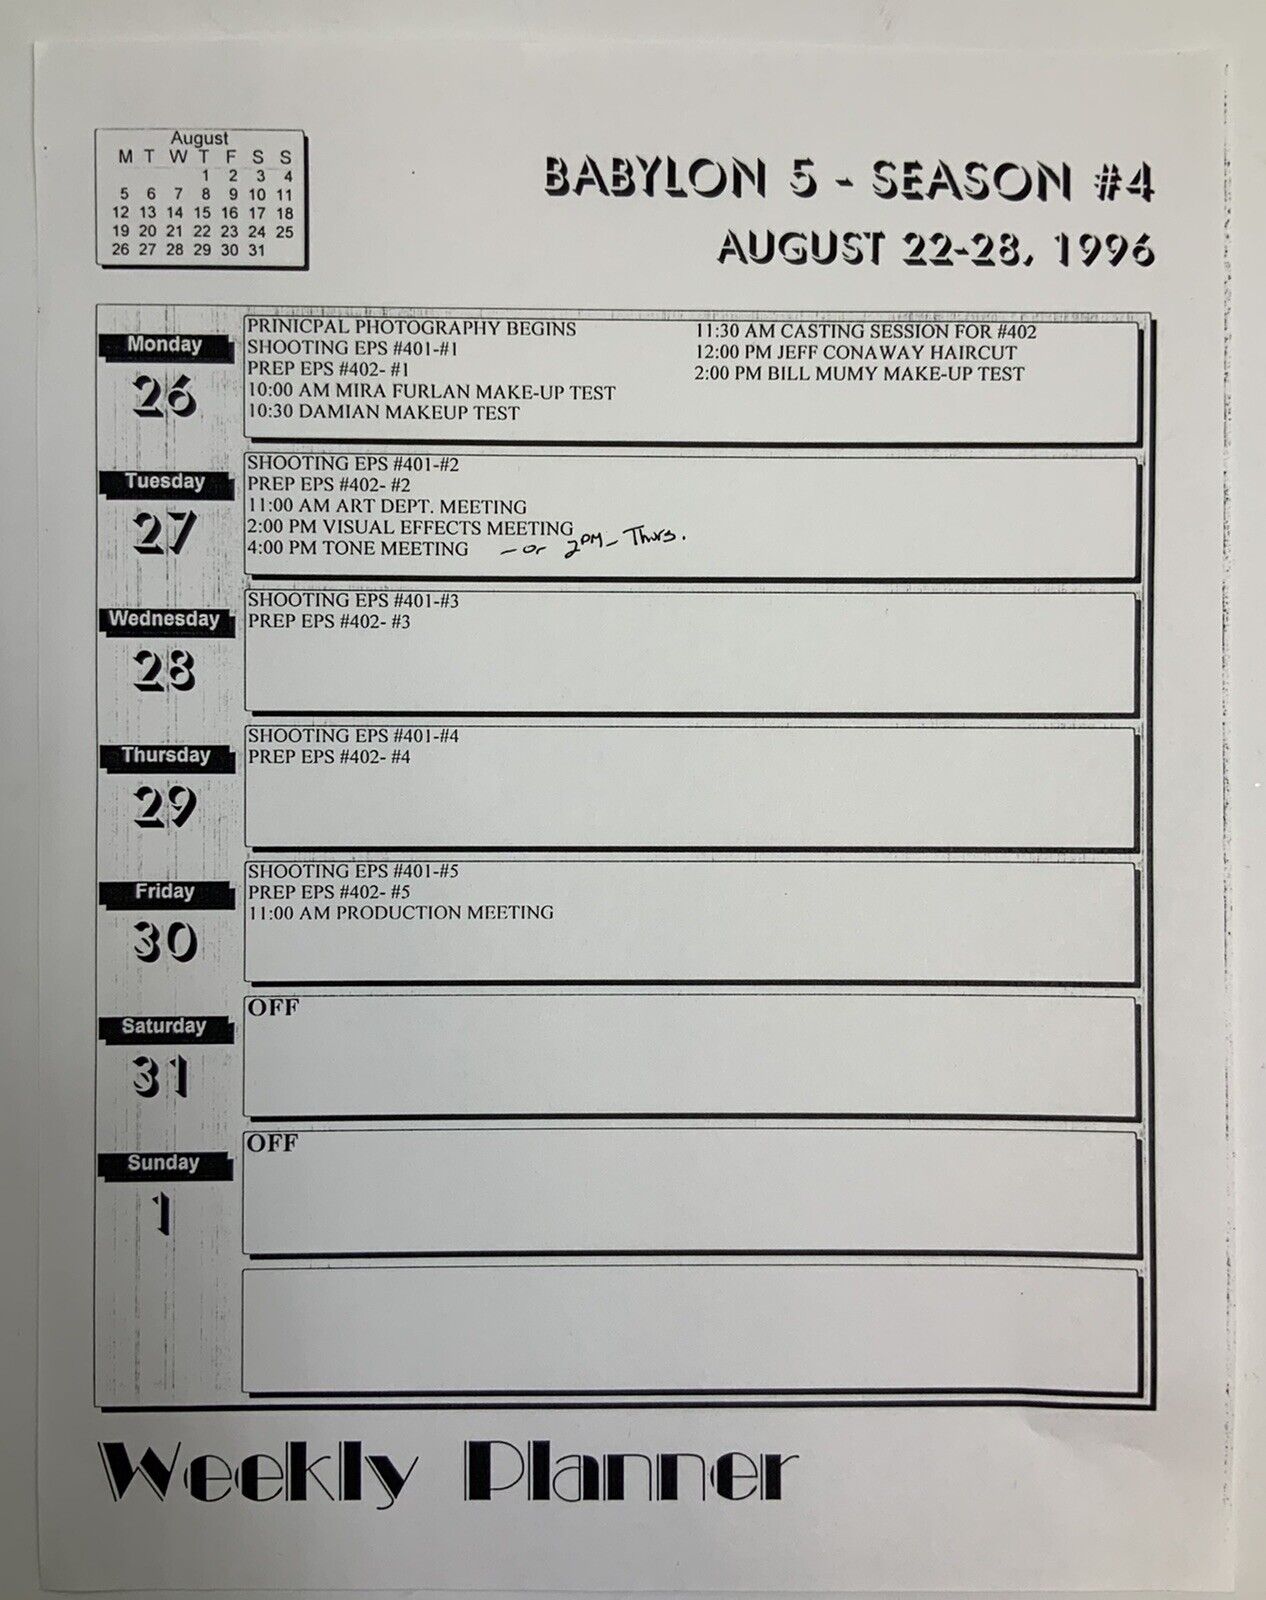 Babylon 5 Season 4 August 26 Through September 1 1996 Weekly Calendar Schedule